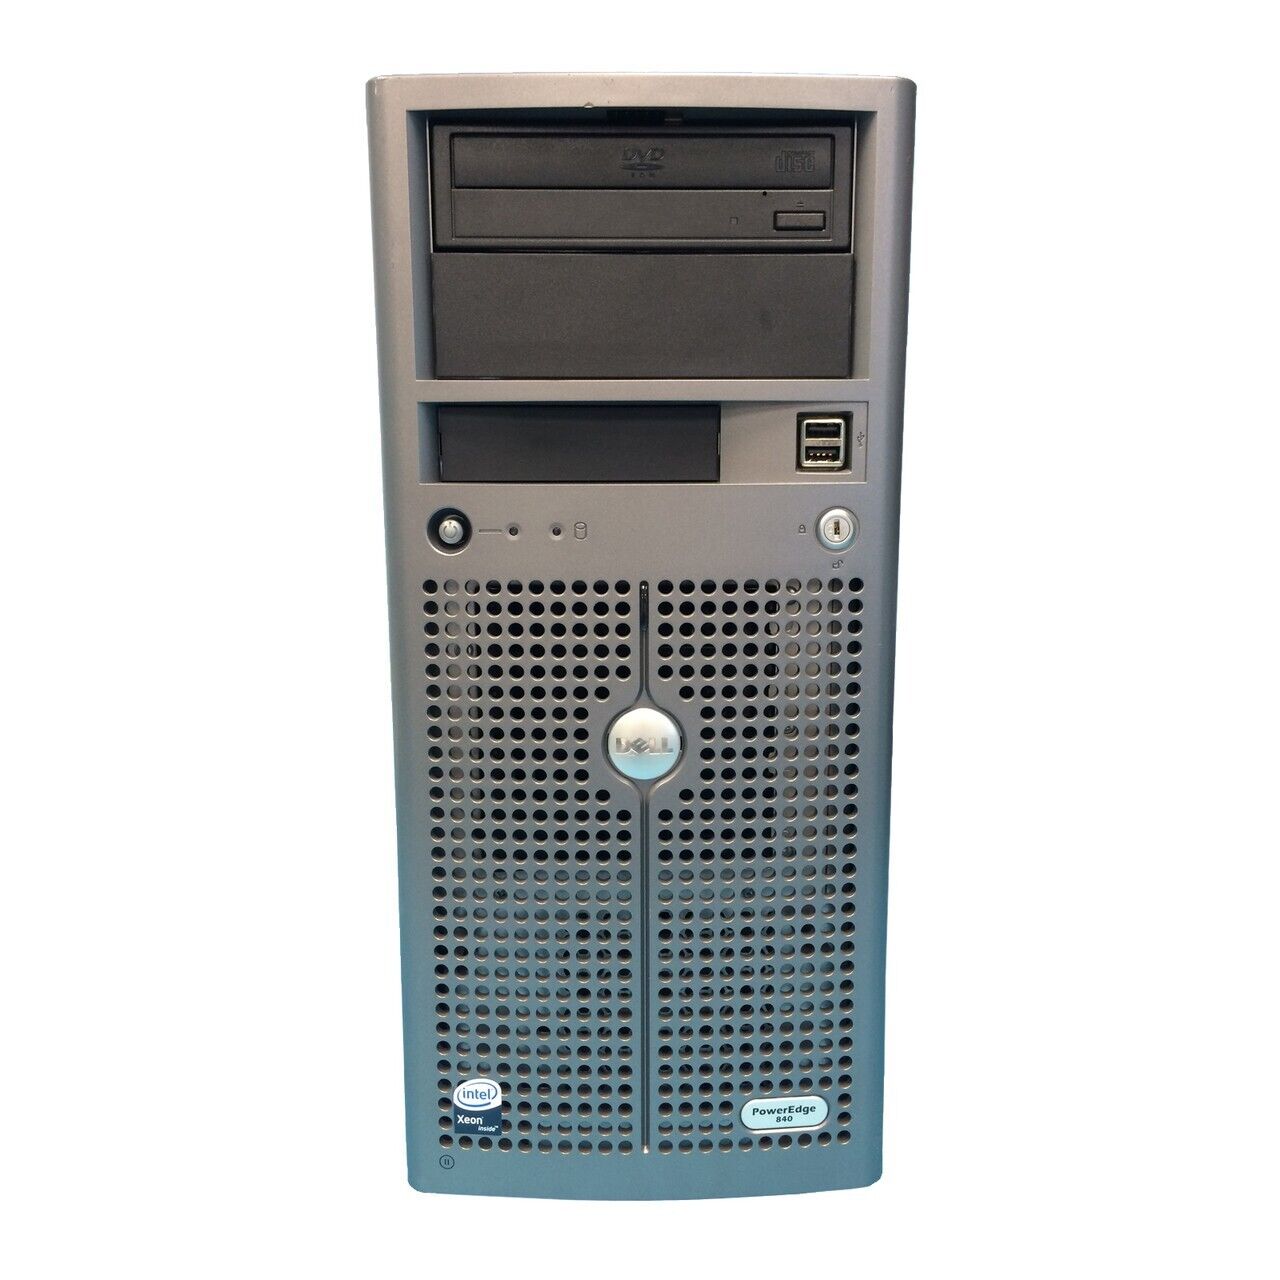 Refurbished PowerEdge 840 Server, Xeon X3220 QC 1.86GHz, 2GB, SAS 5IR, Hot Plug